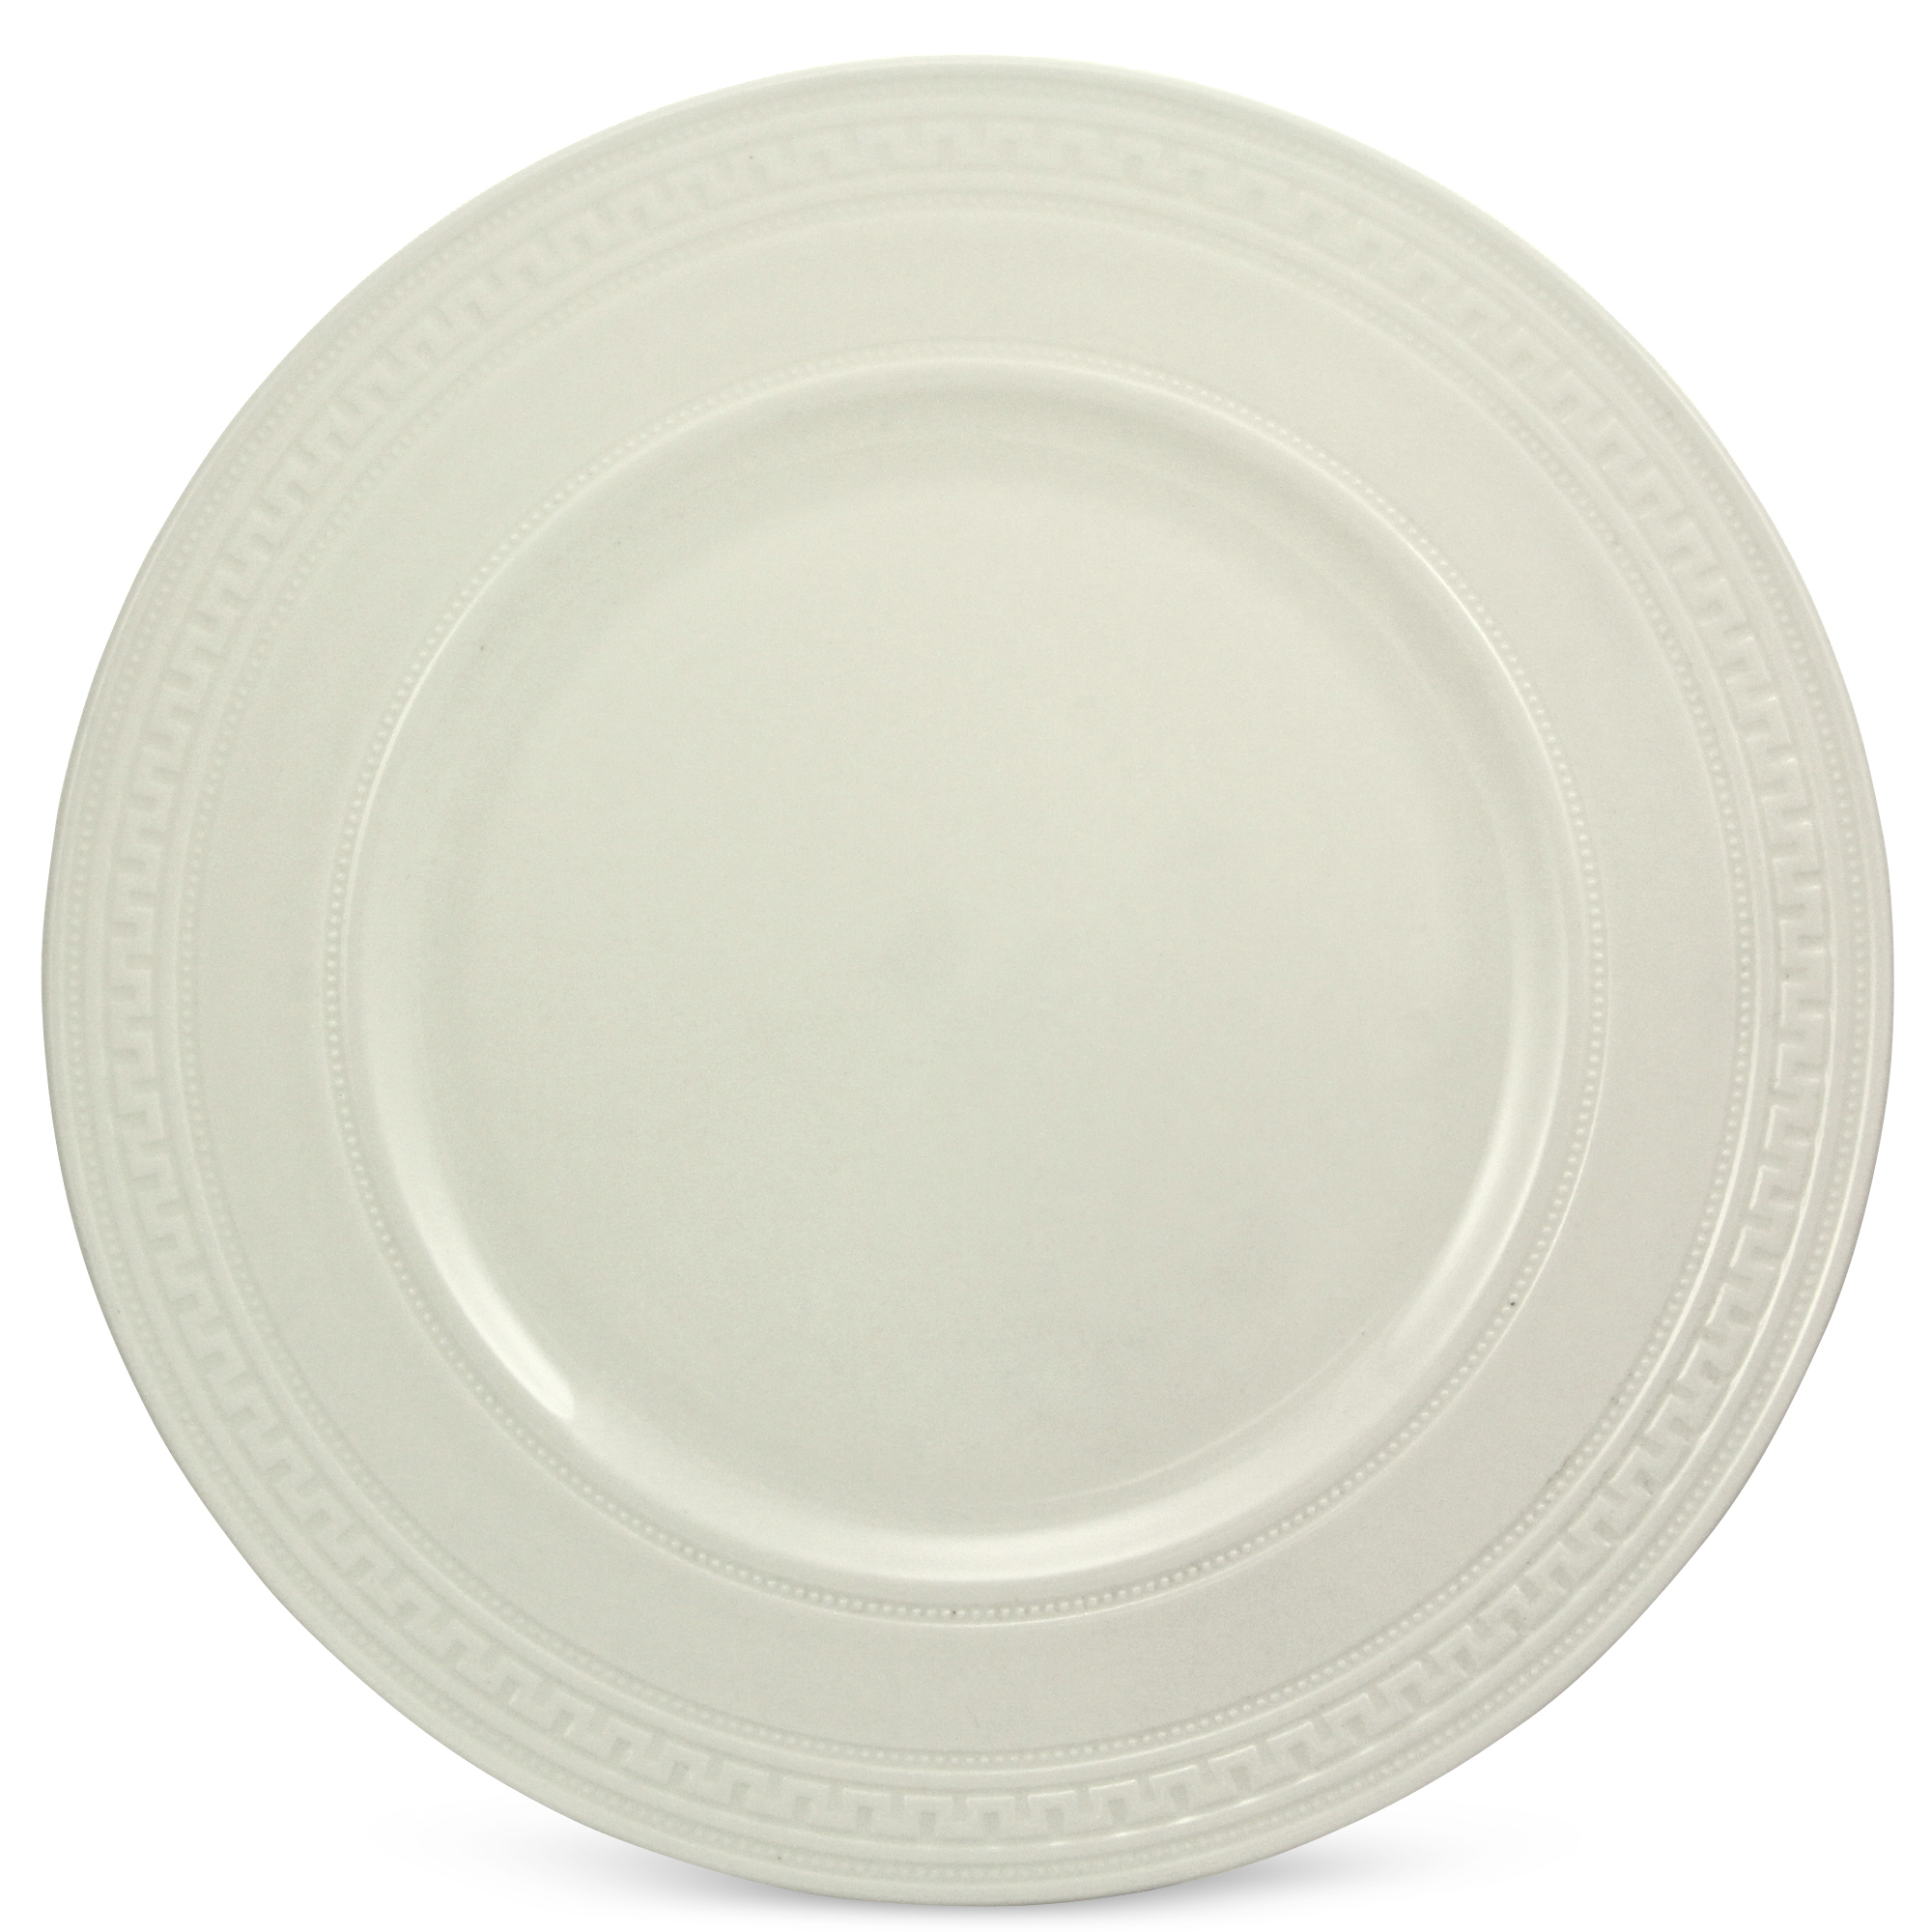 NEW Wedgwood Intaglio Dinner Plate 